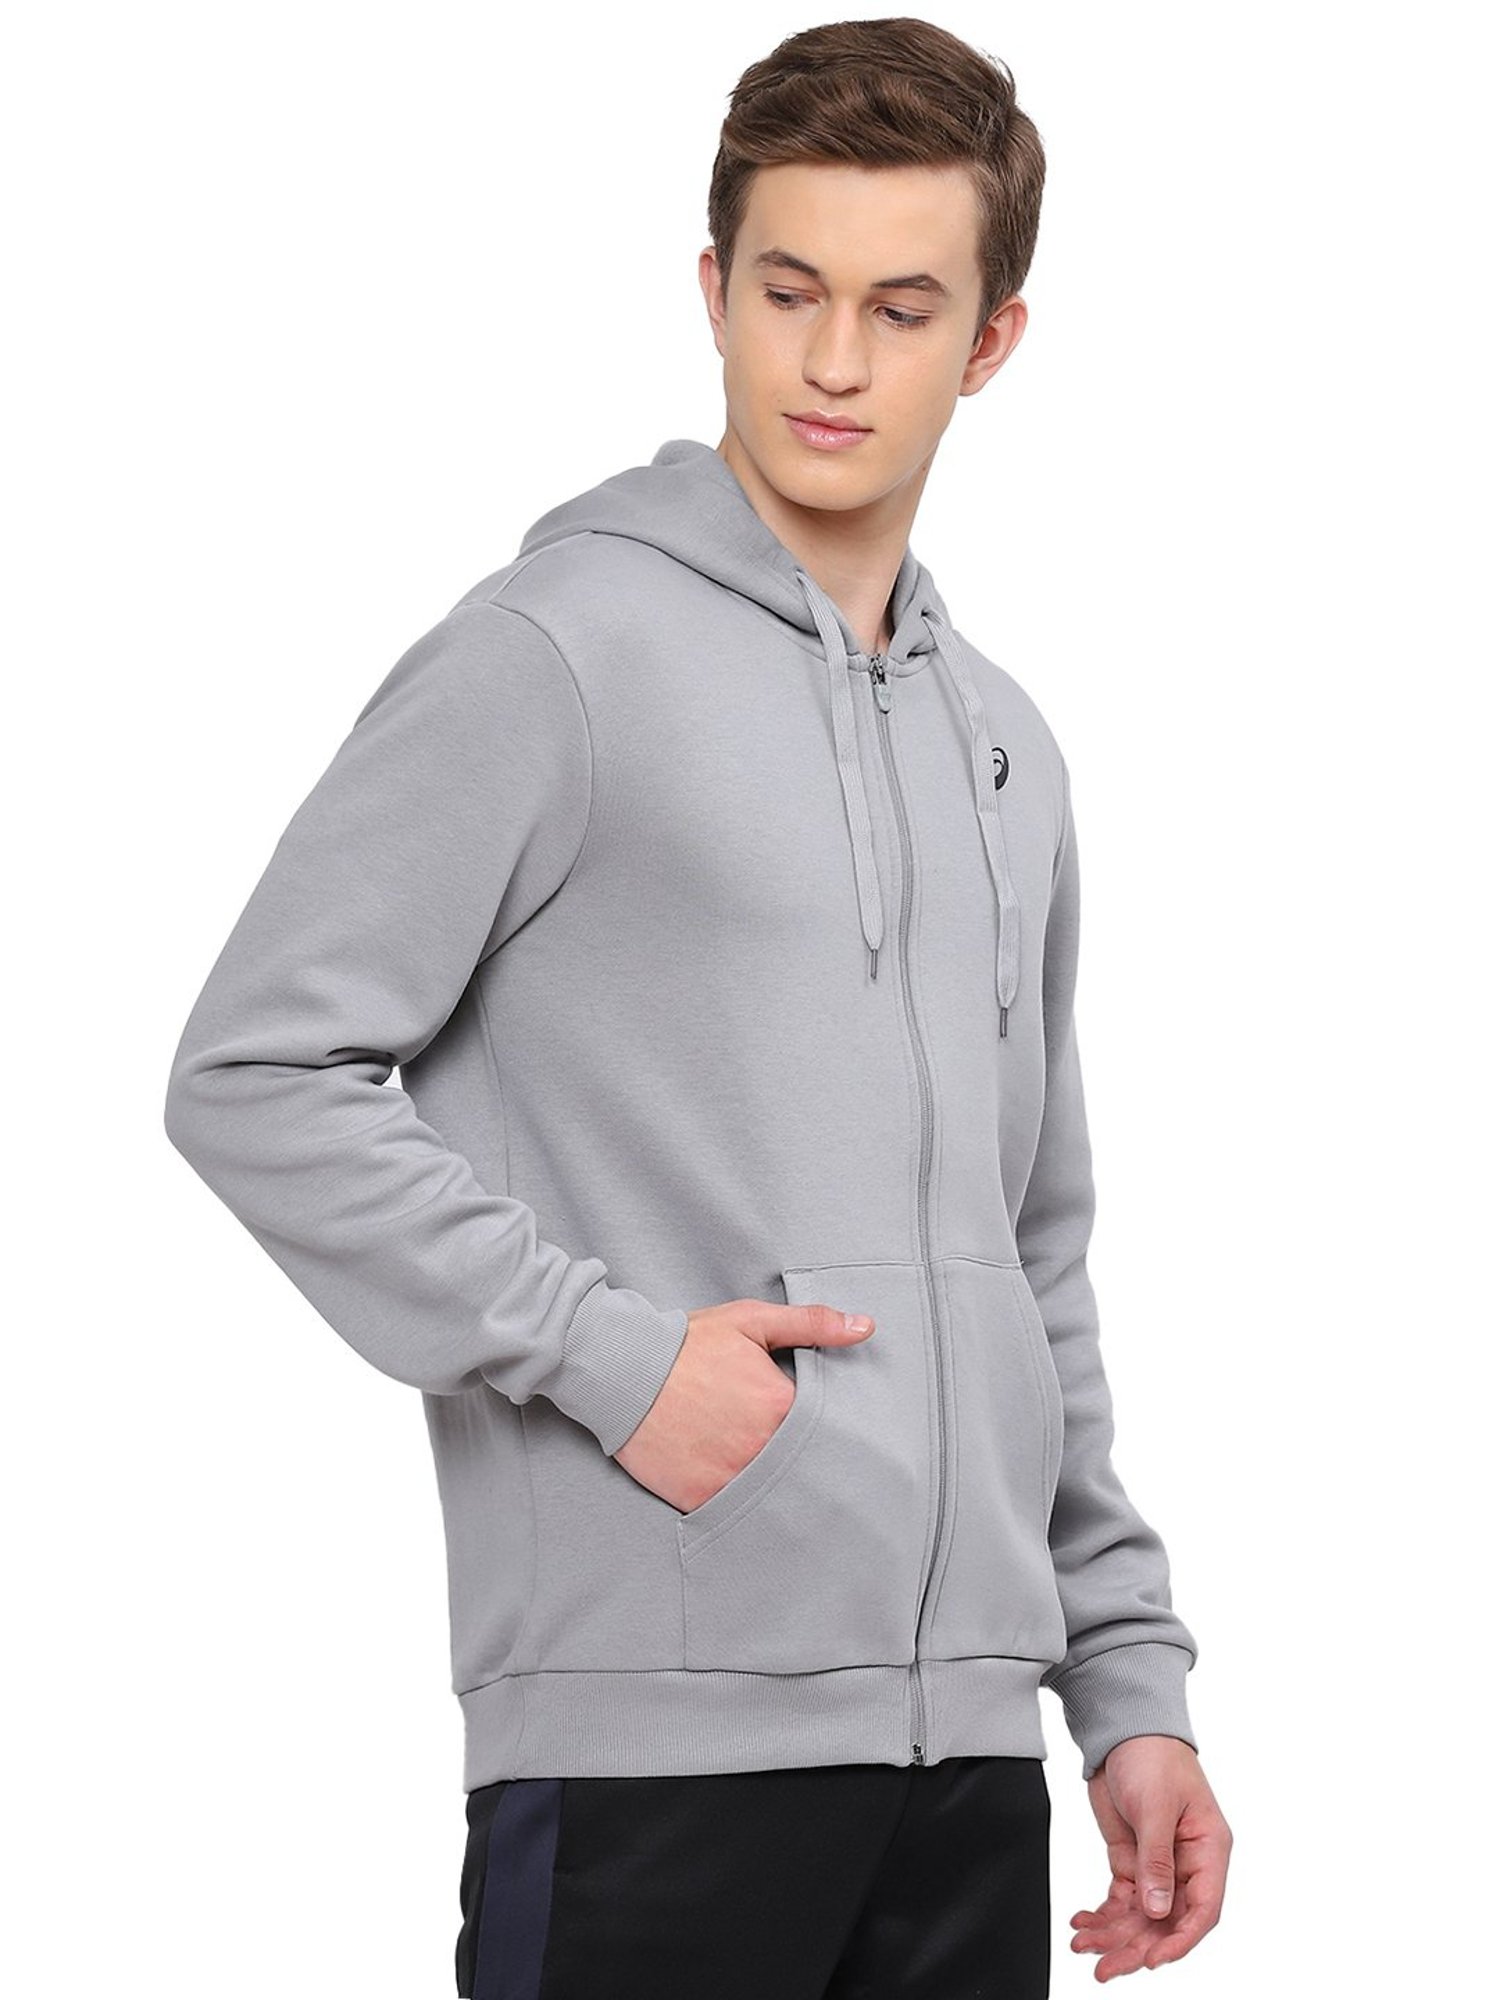 Buy Asics One Point FZ Grey Regular Fit Hooded Sweatshirt for 